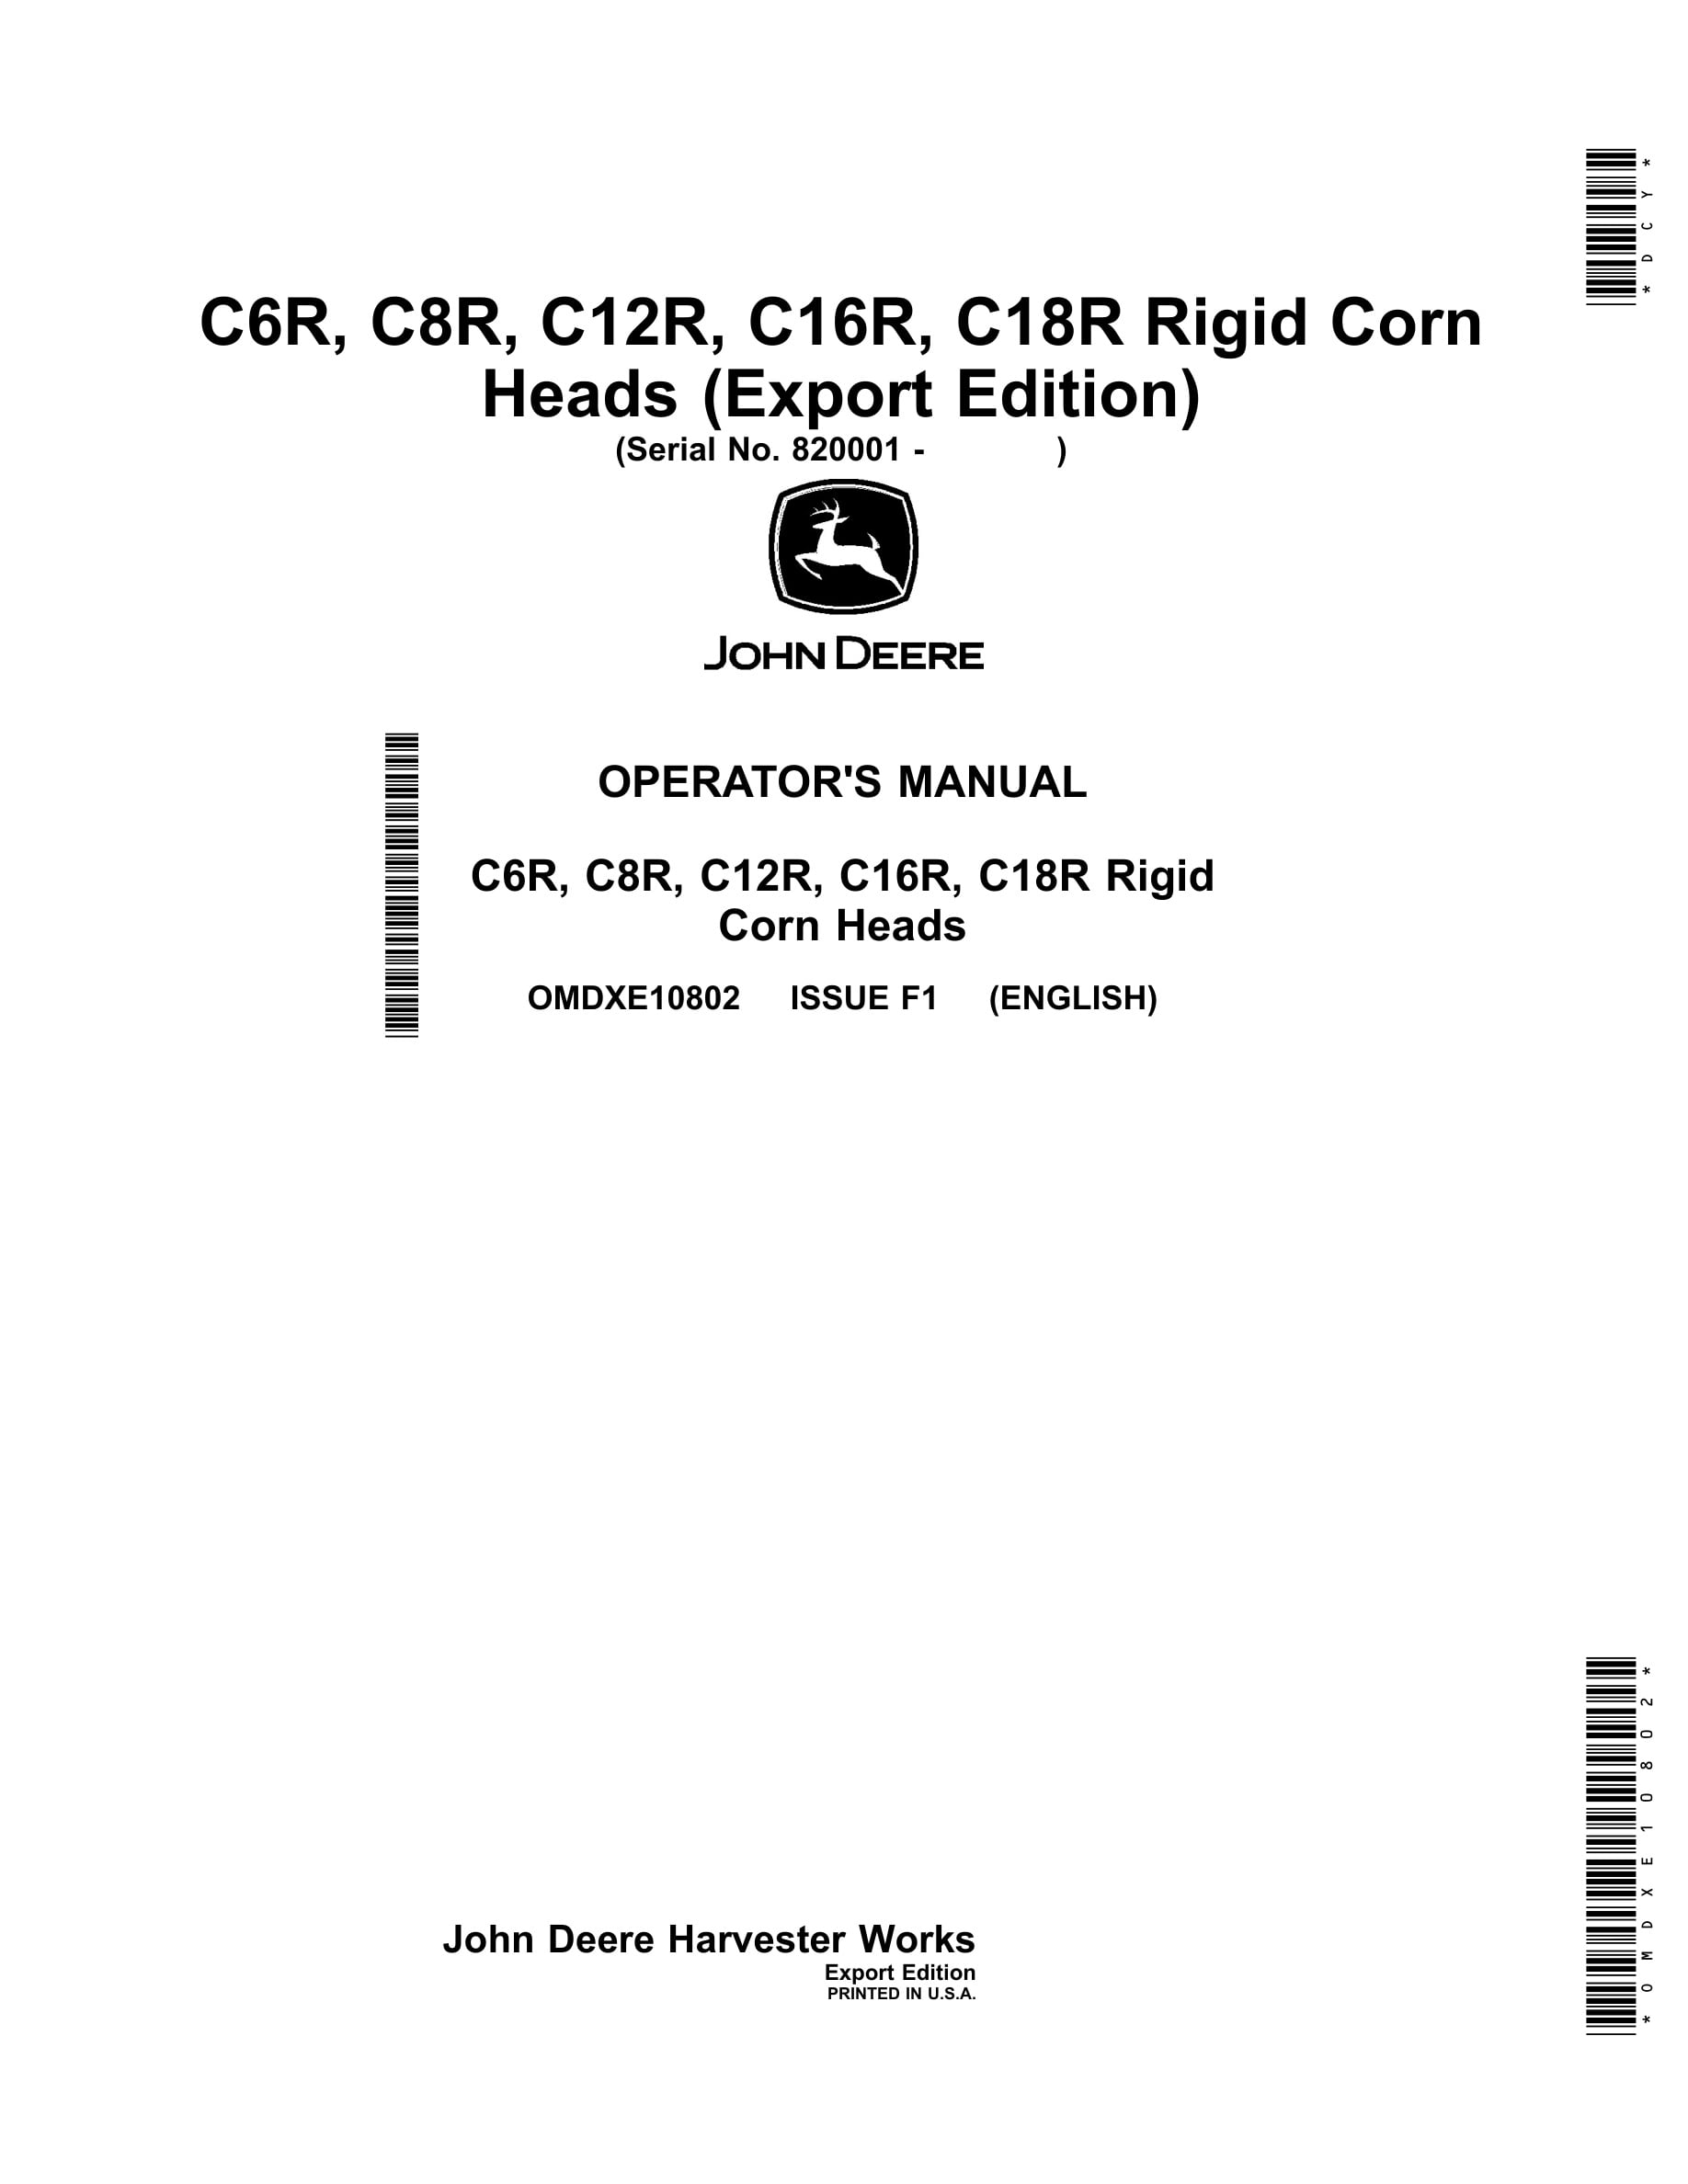 John Deere C6R, C8R, C12R, C16R, C18R Rigid Corn Heads Operator Manual OMDXE10802-1